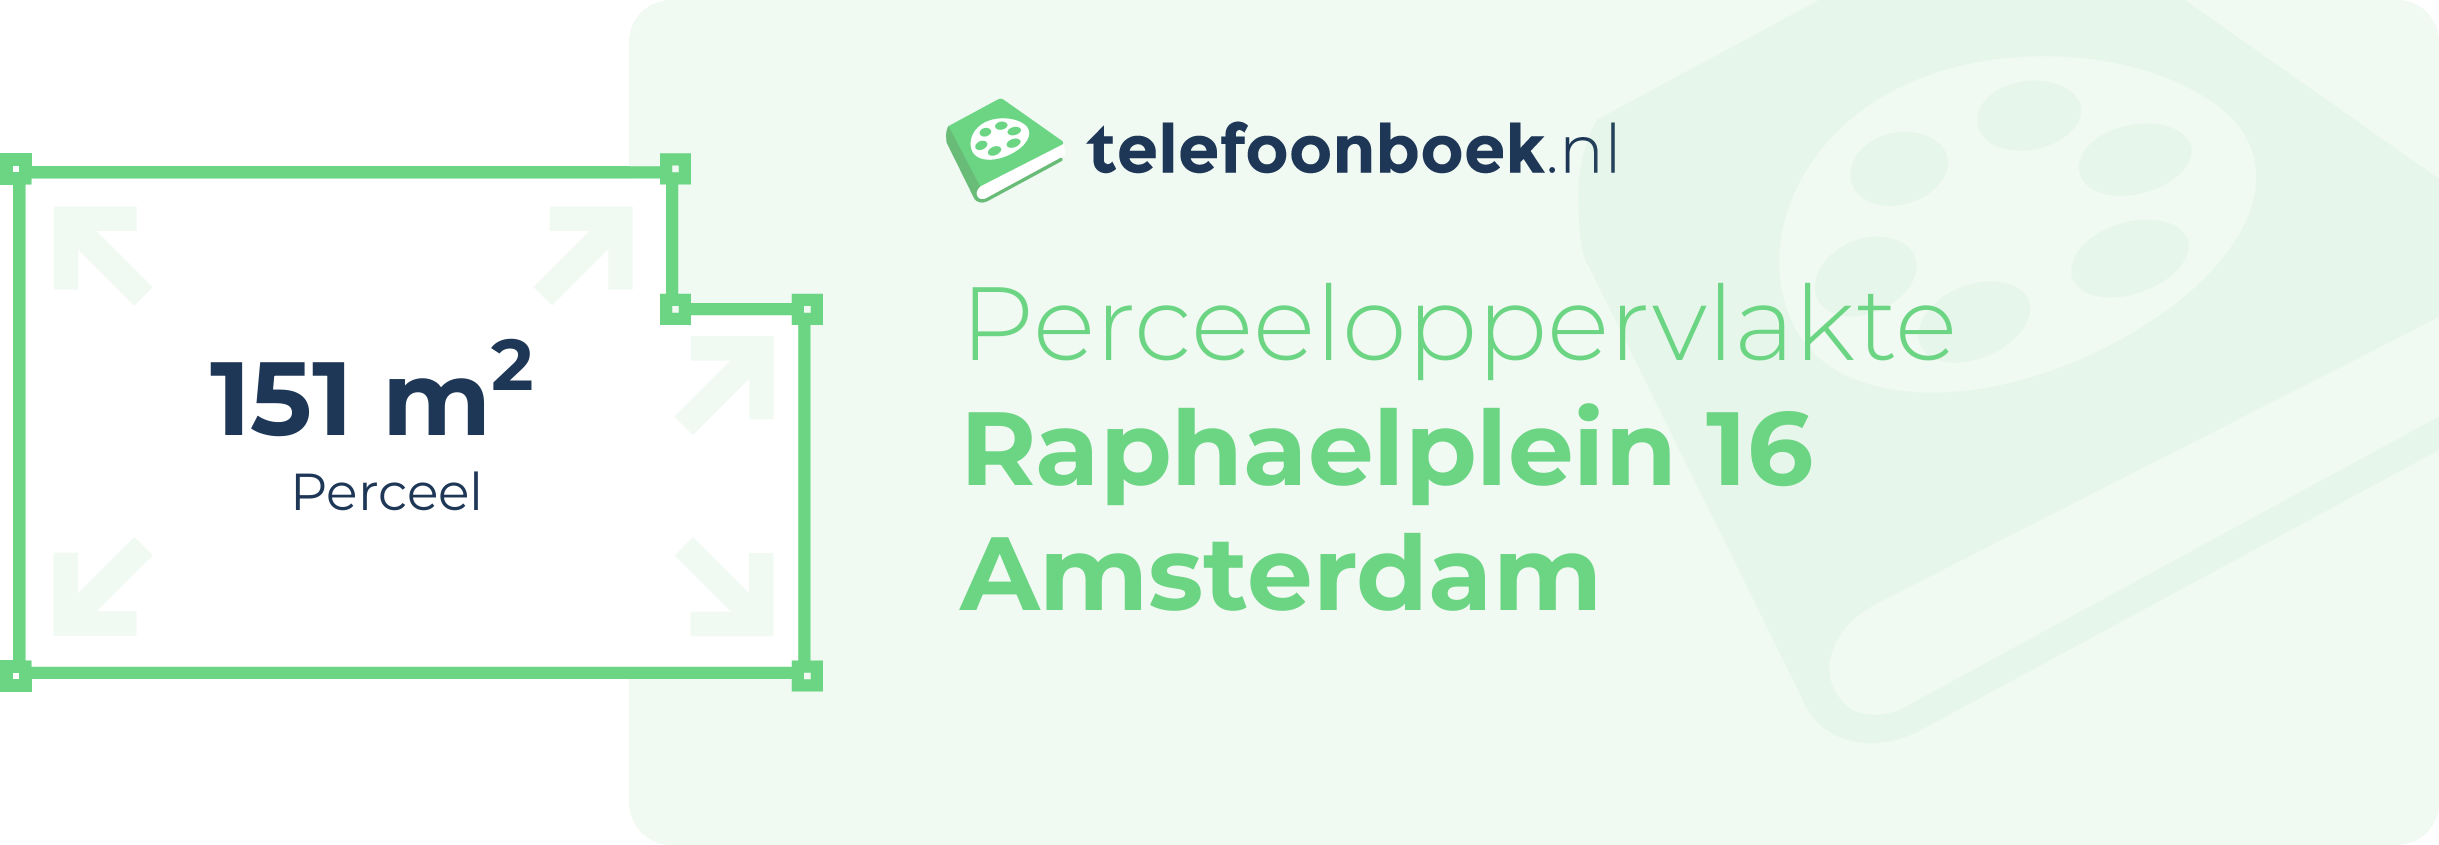 Perceeloppervlakte Raphaelplein 16 Amsterdam